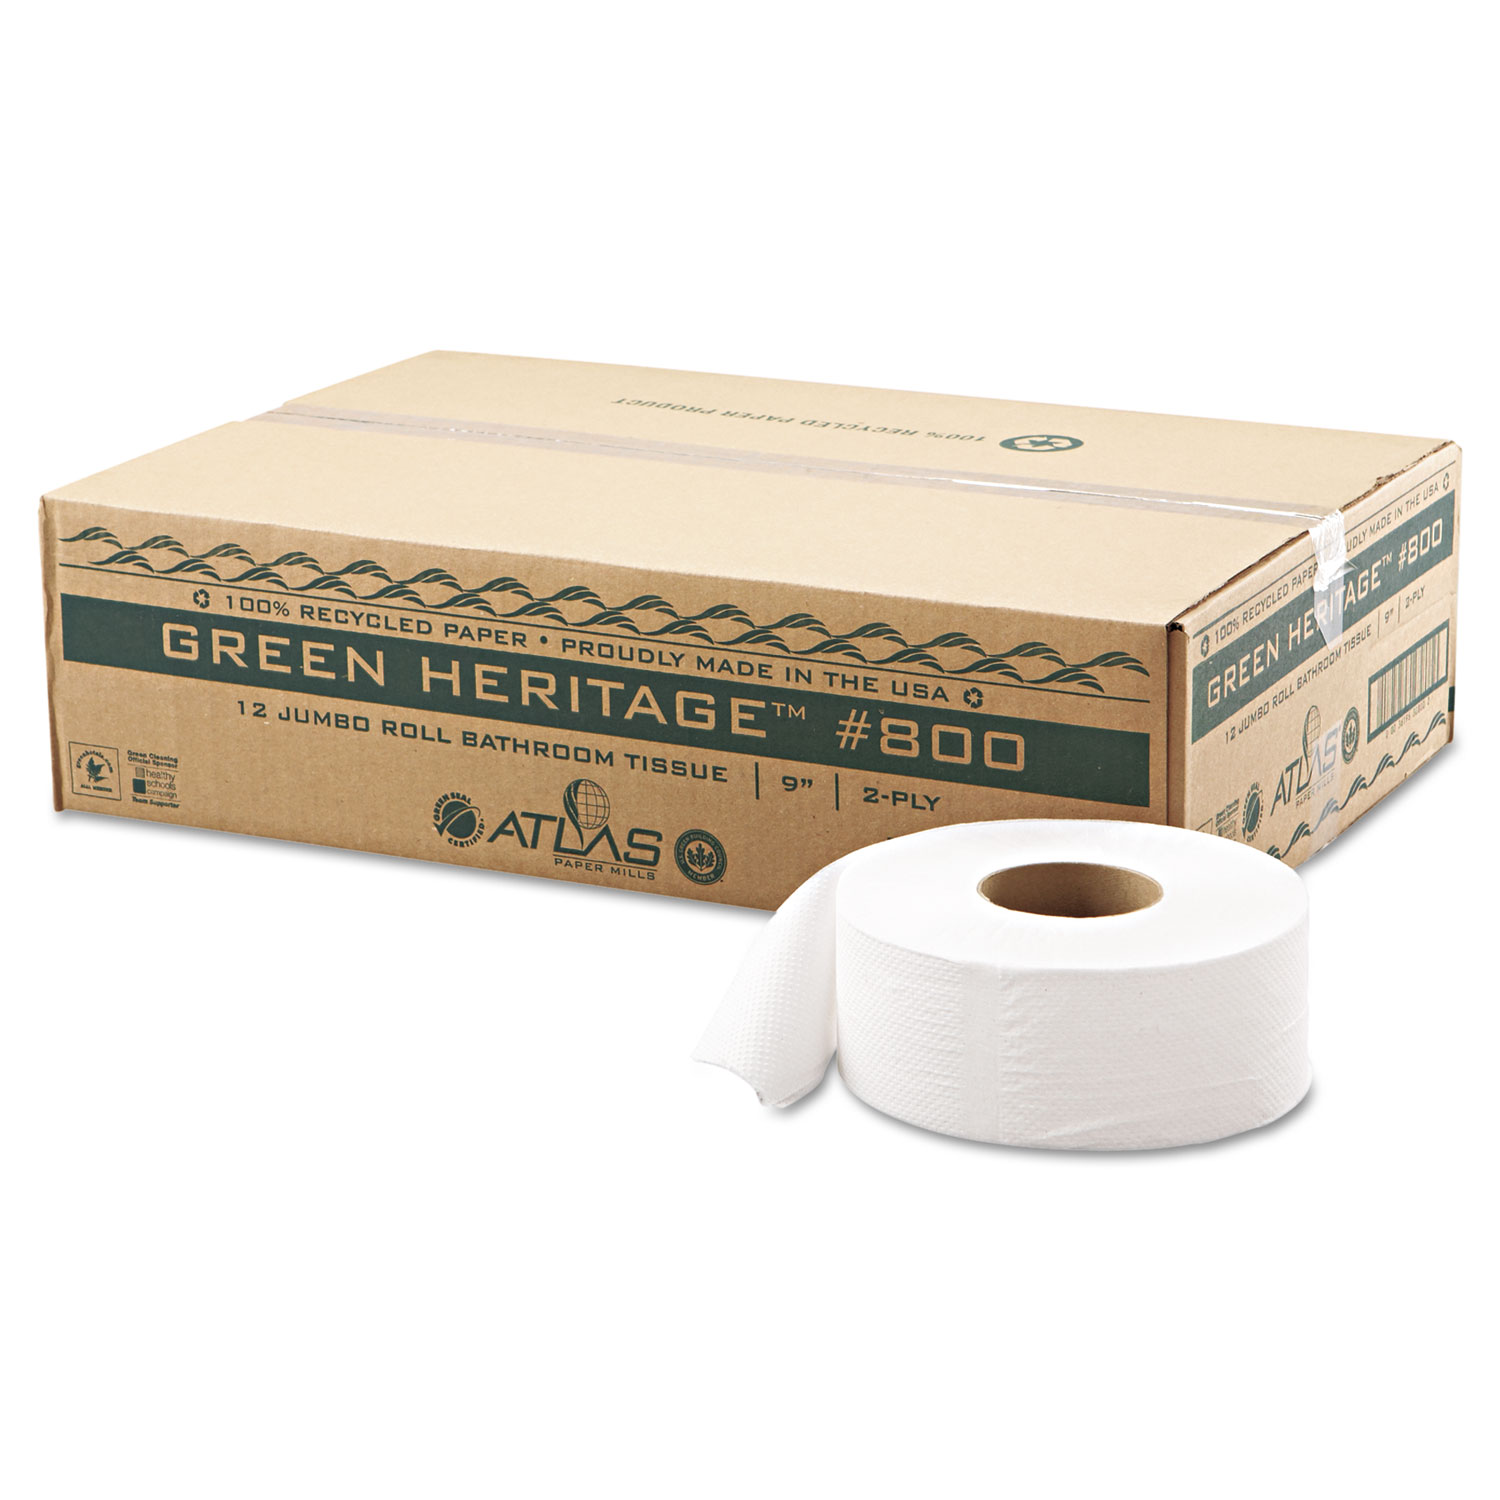 Papier toilette Maxi Jumbo simple épaisseur Renova Green - 9